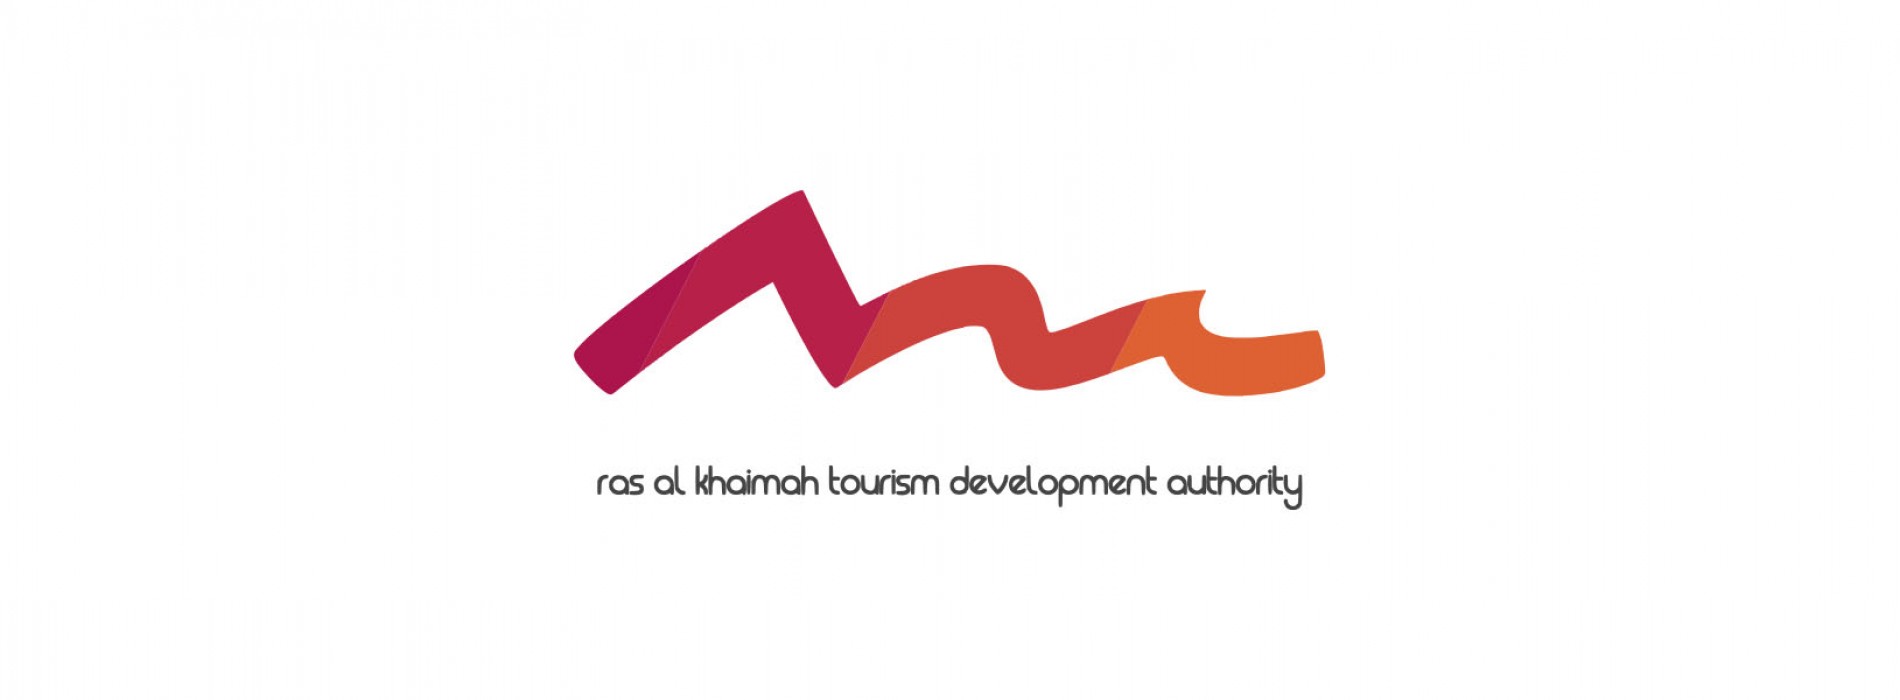 RAS AL KHAIMAH TOURISM DEVELOPMENT AUTHORITY ANNOUNCES 2022 ROADSHOW IN INDIA